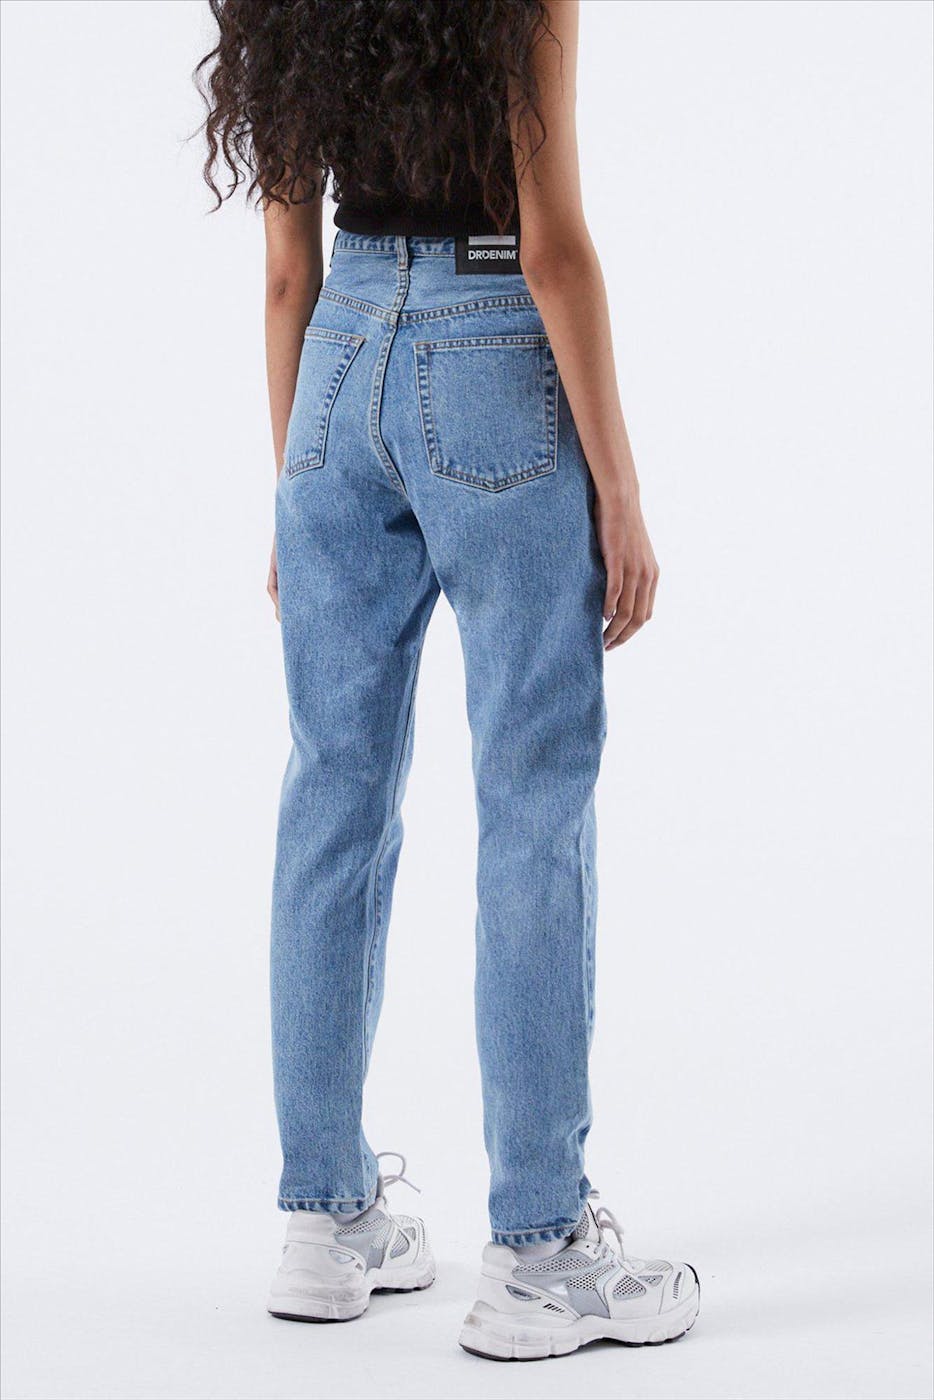 Dr. Denim - Nora - mom jeans high waist loose fit - indigo denim